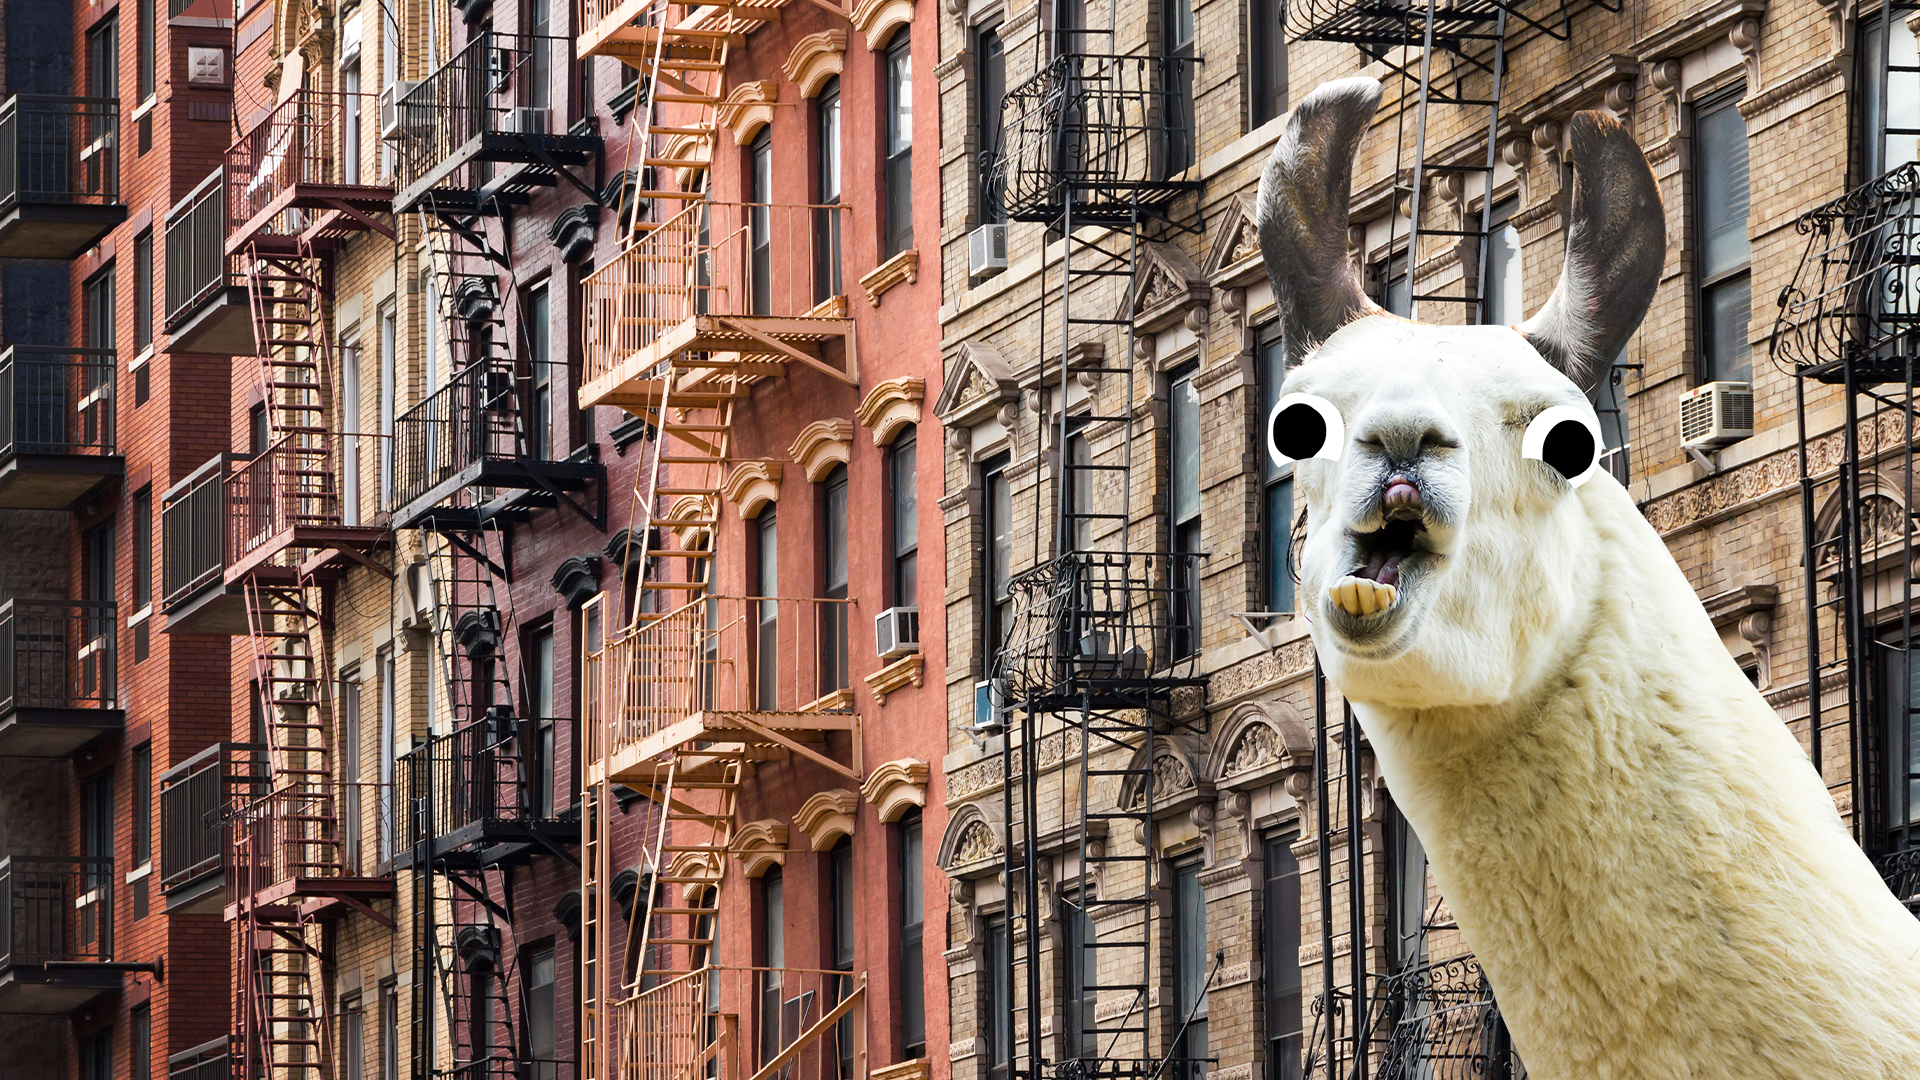 New York flats and derpy llama